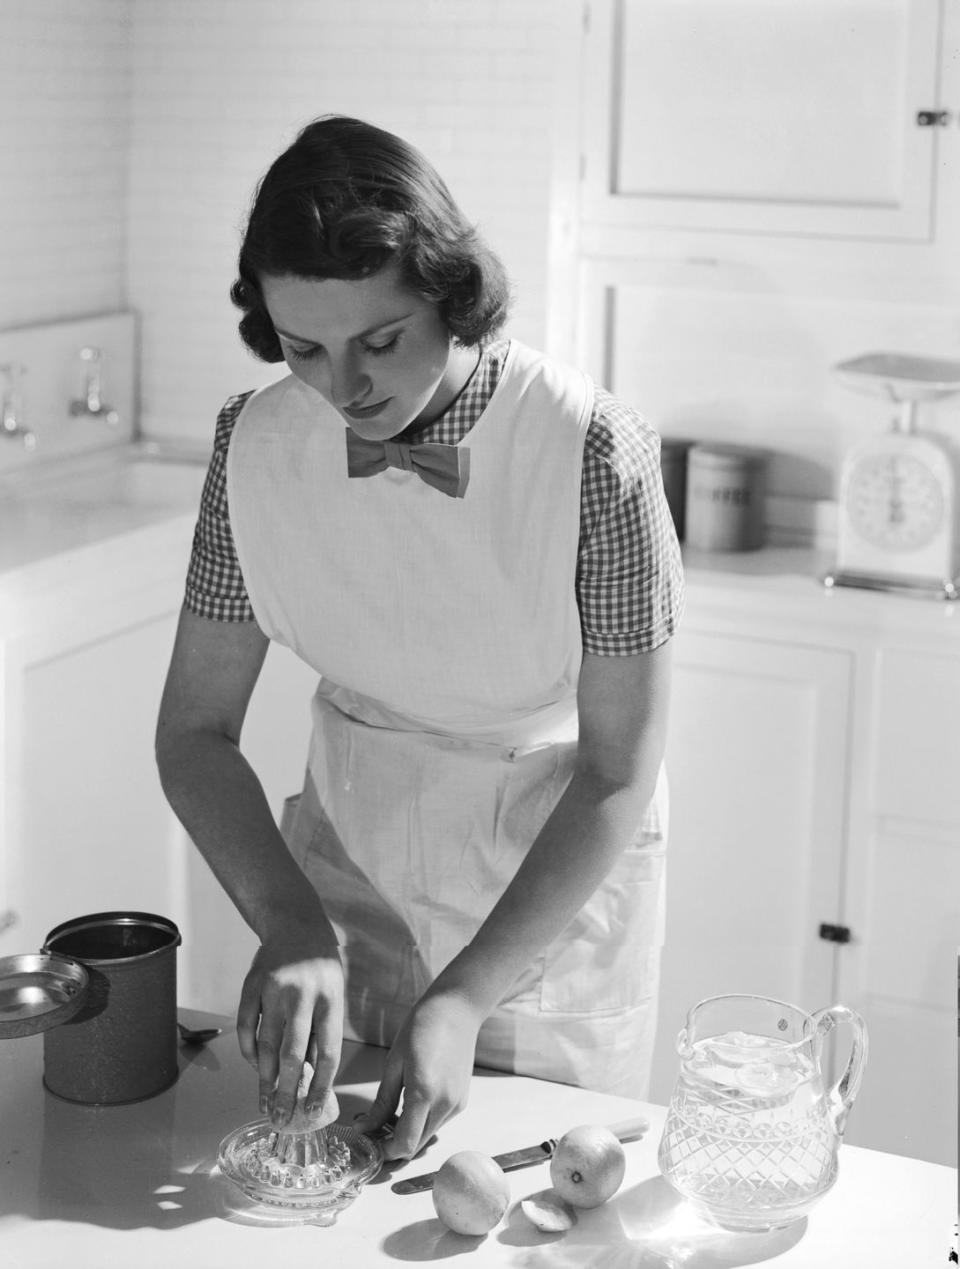 1950s: Use hot water to juice lemons.